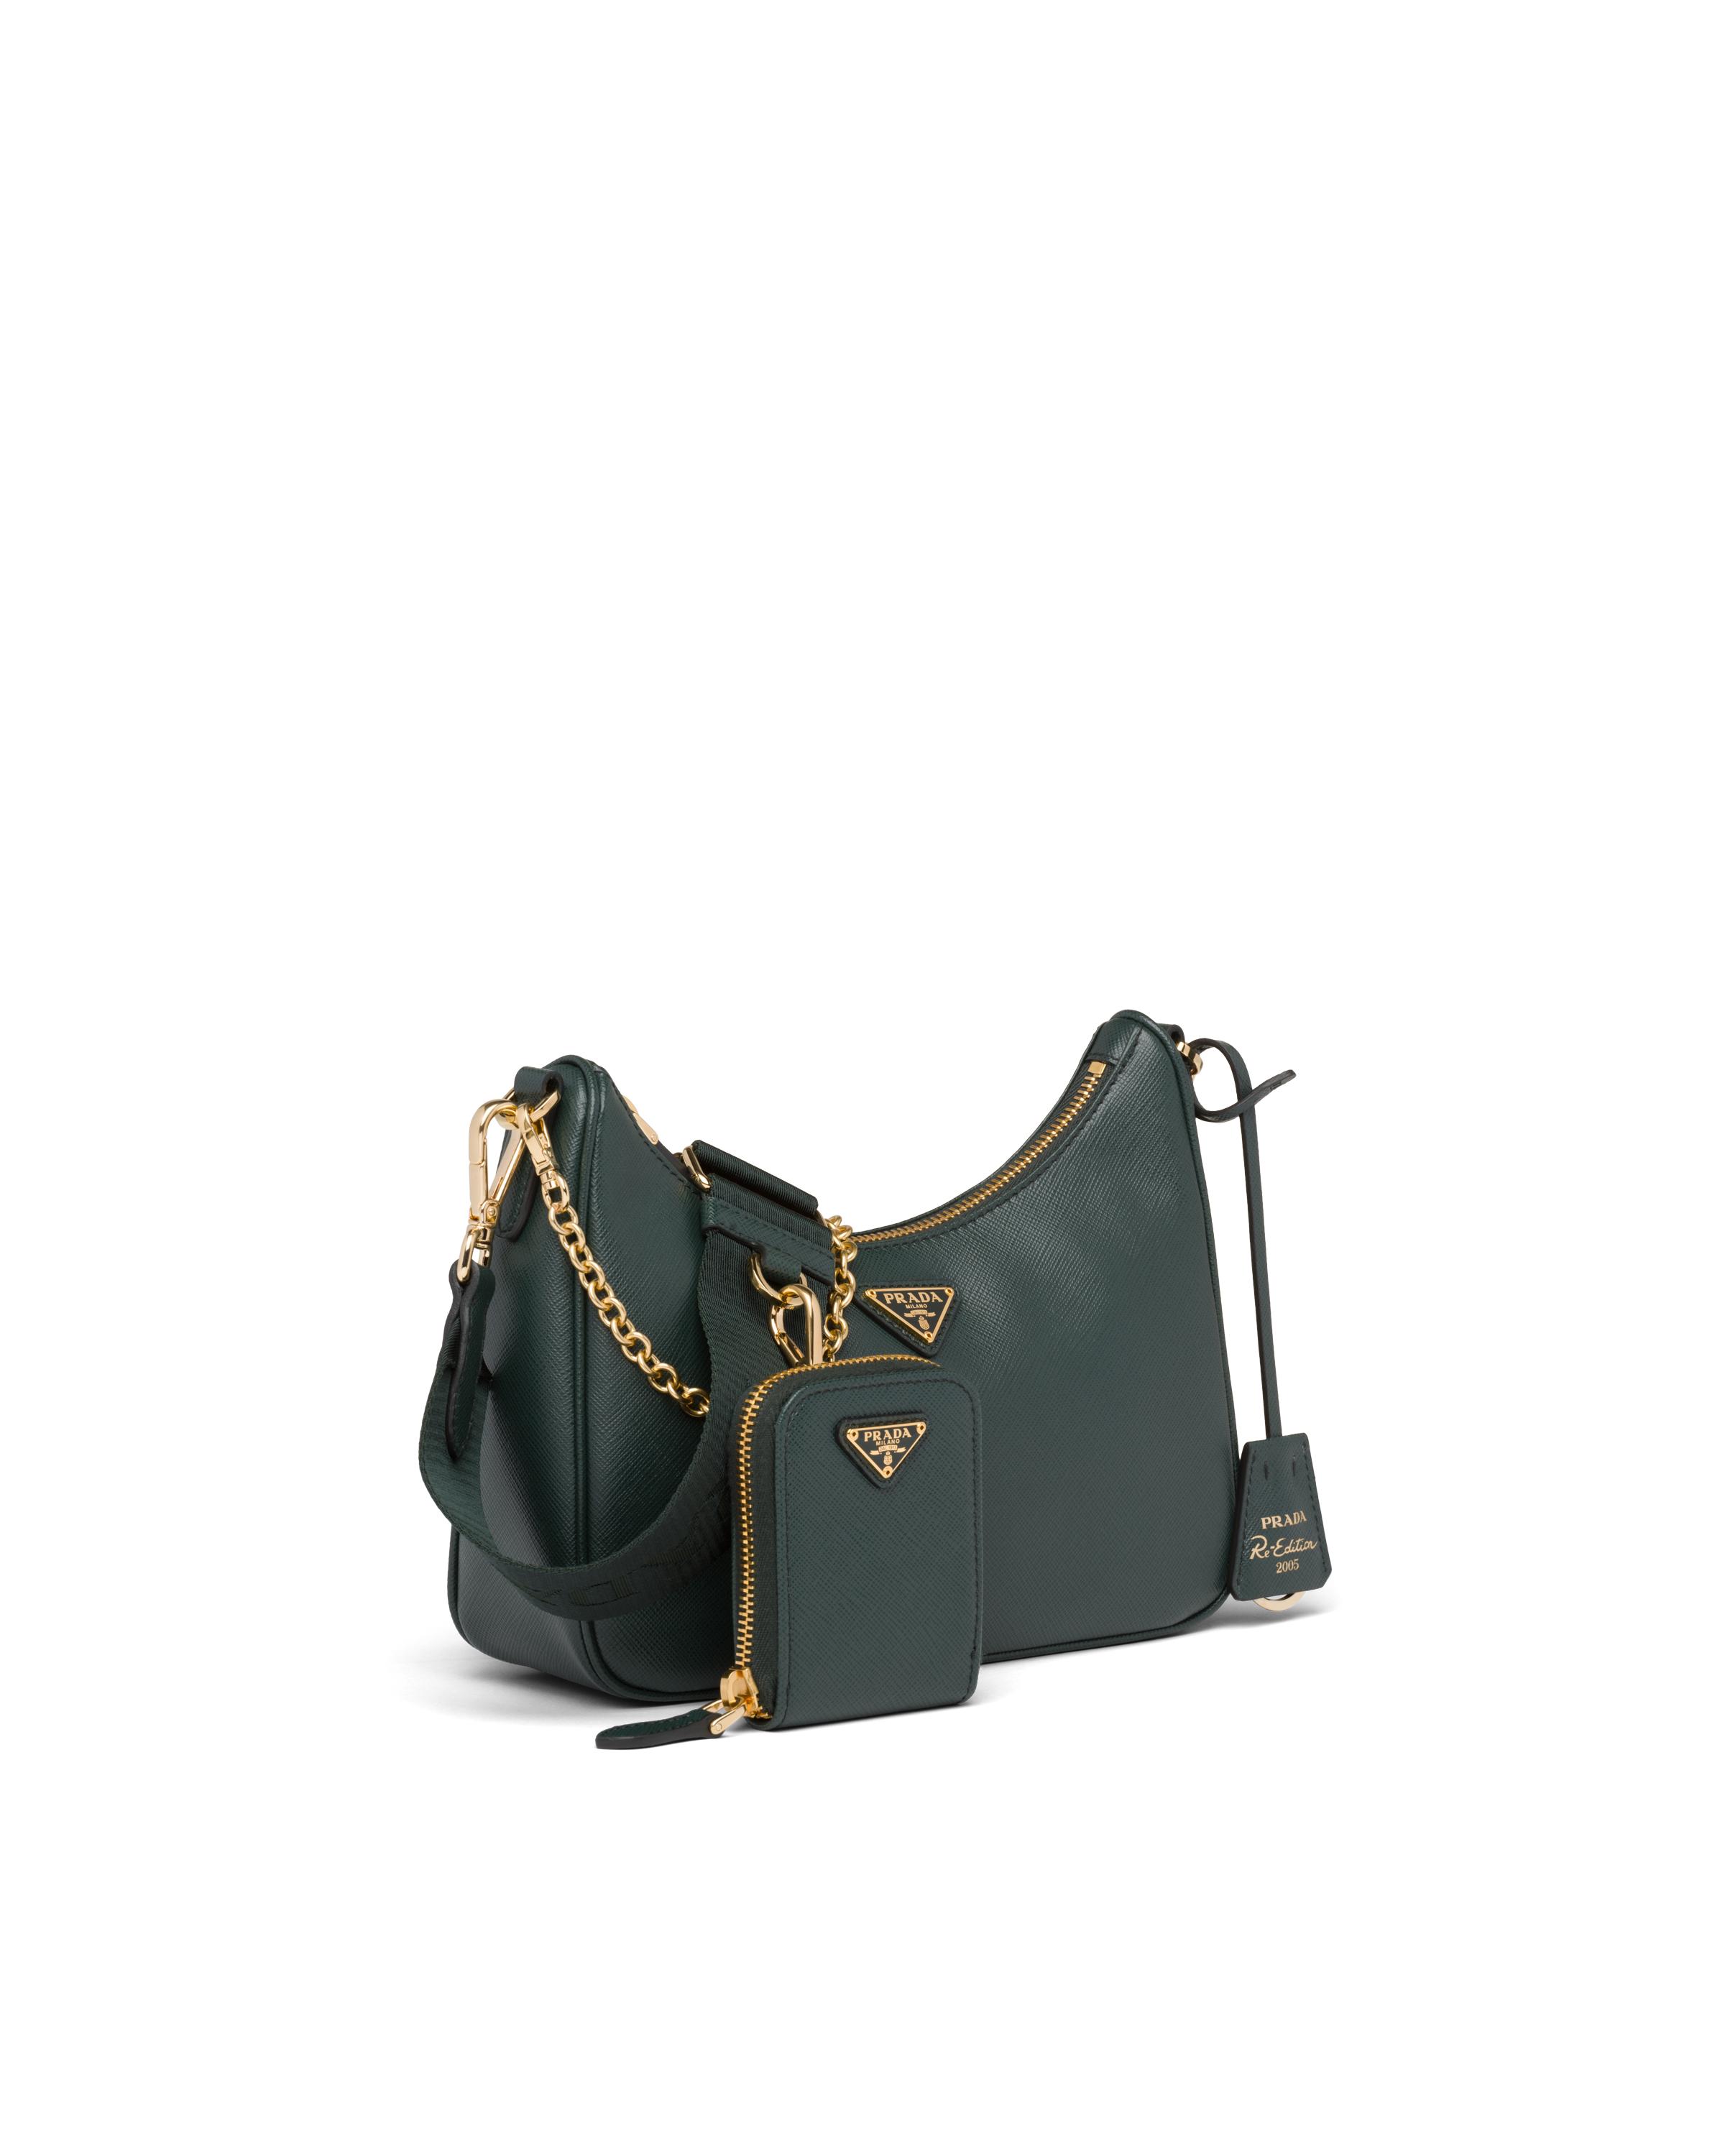 Prada Re-edition 2005 Saffiano Leather Bag in Emerald Green (Green) | Lyst